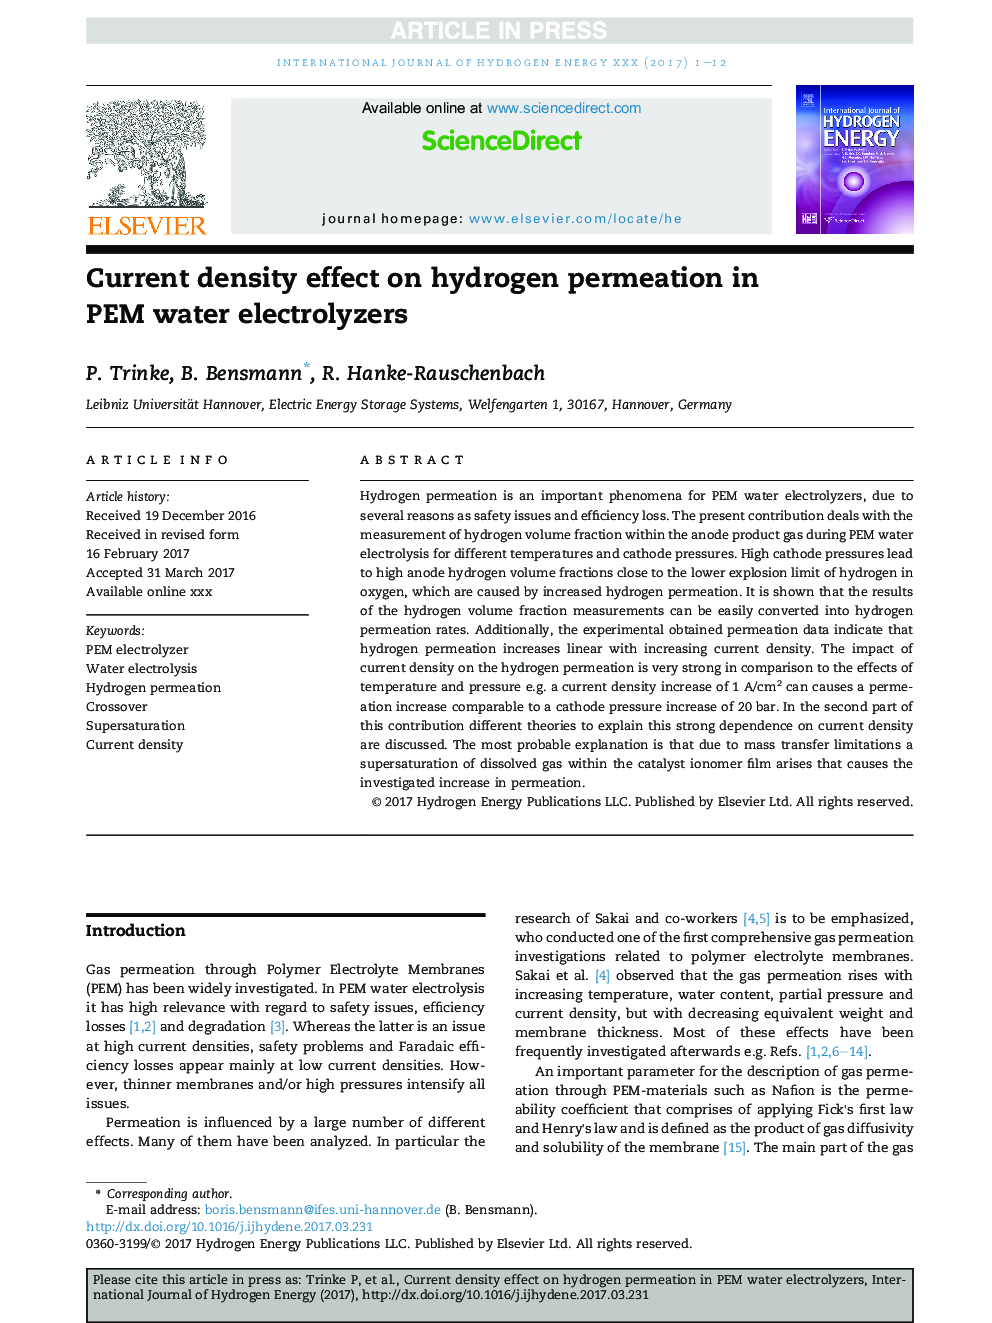 Current density effect on hydrogen permeation in PEM water electrolyzers